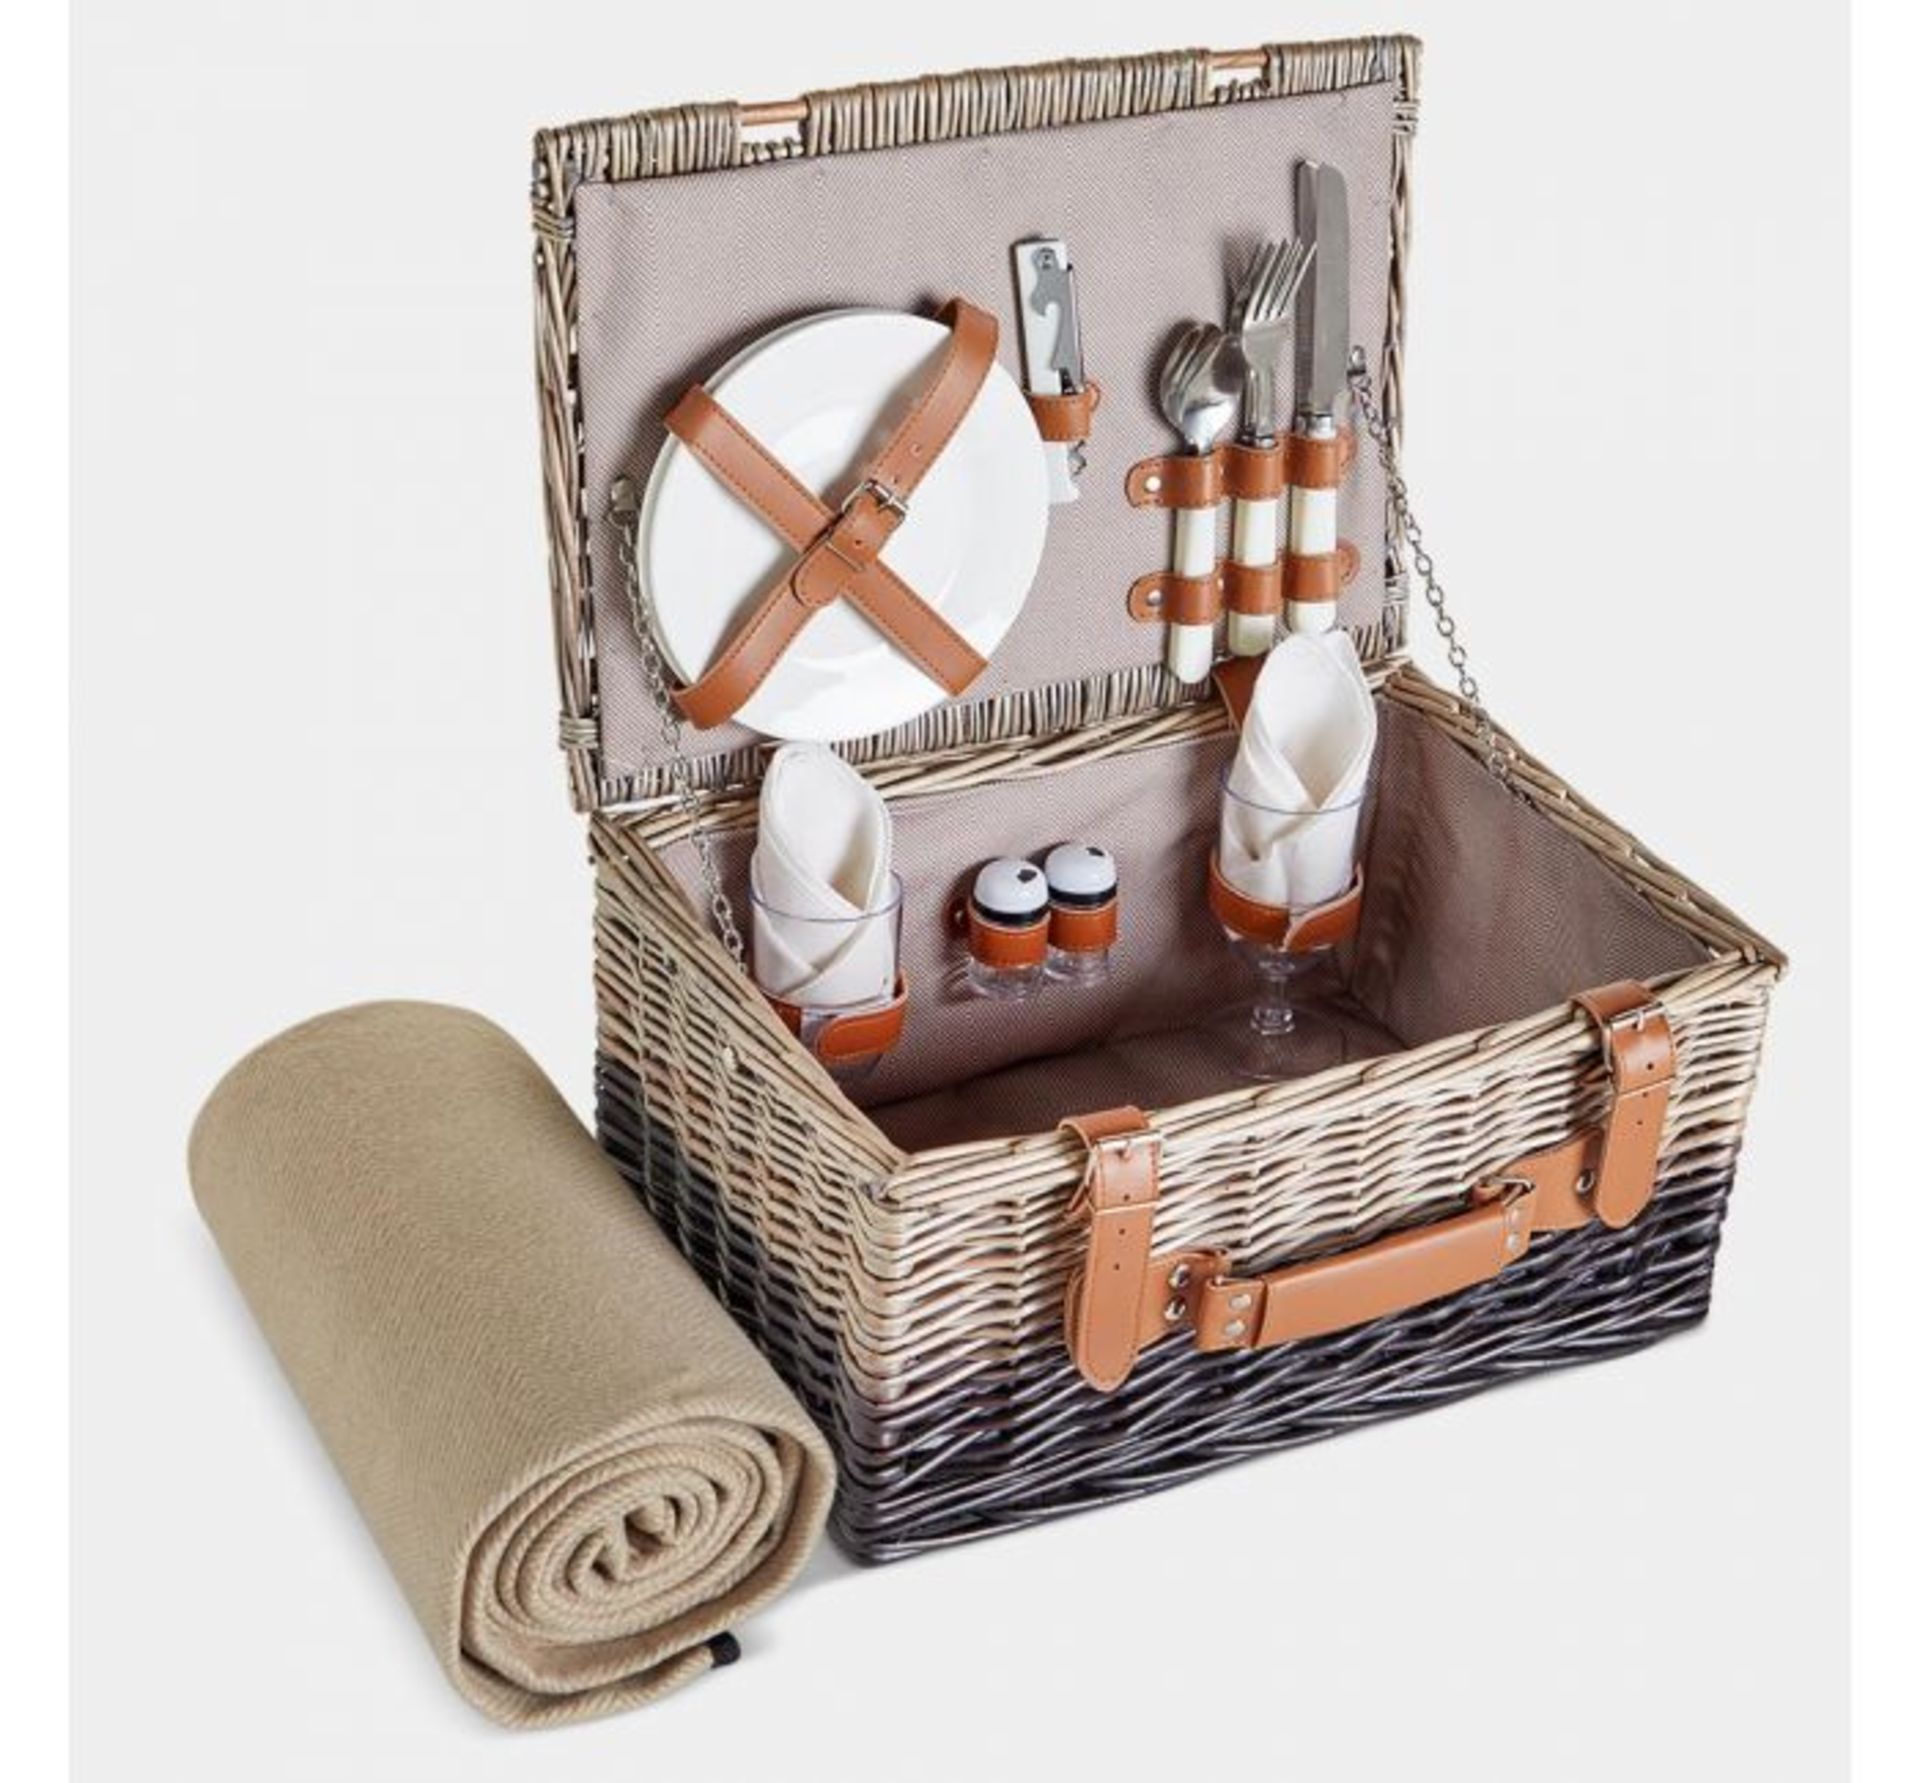 (OM21) 2 Person Herringbone Picnic Hamper Includes waterproof-backed picnic blanket, cutlery, ... - Image 2 of 3